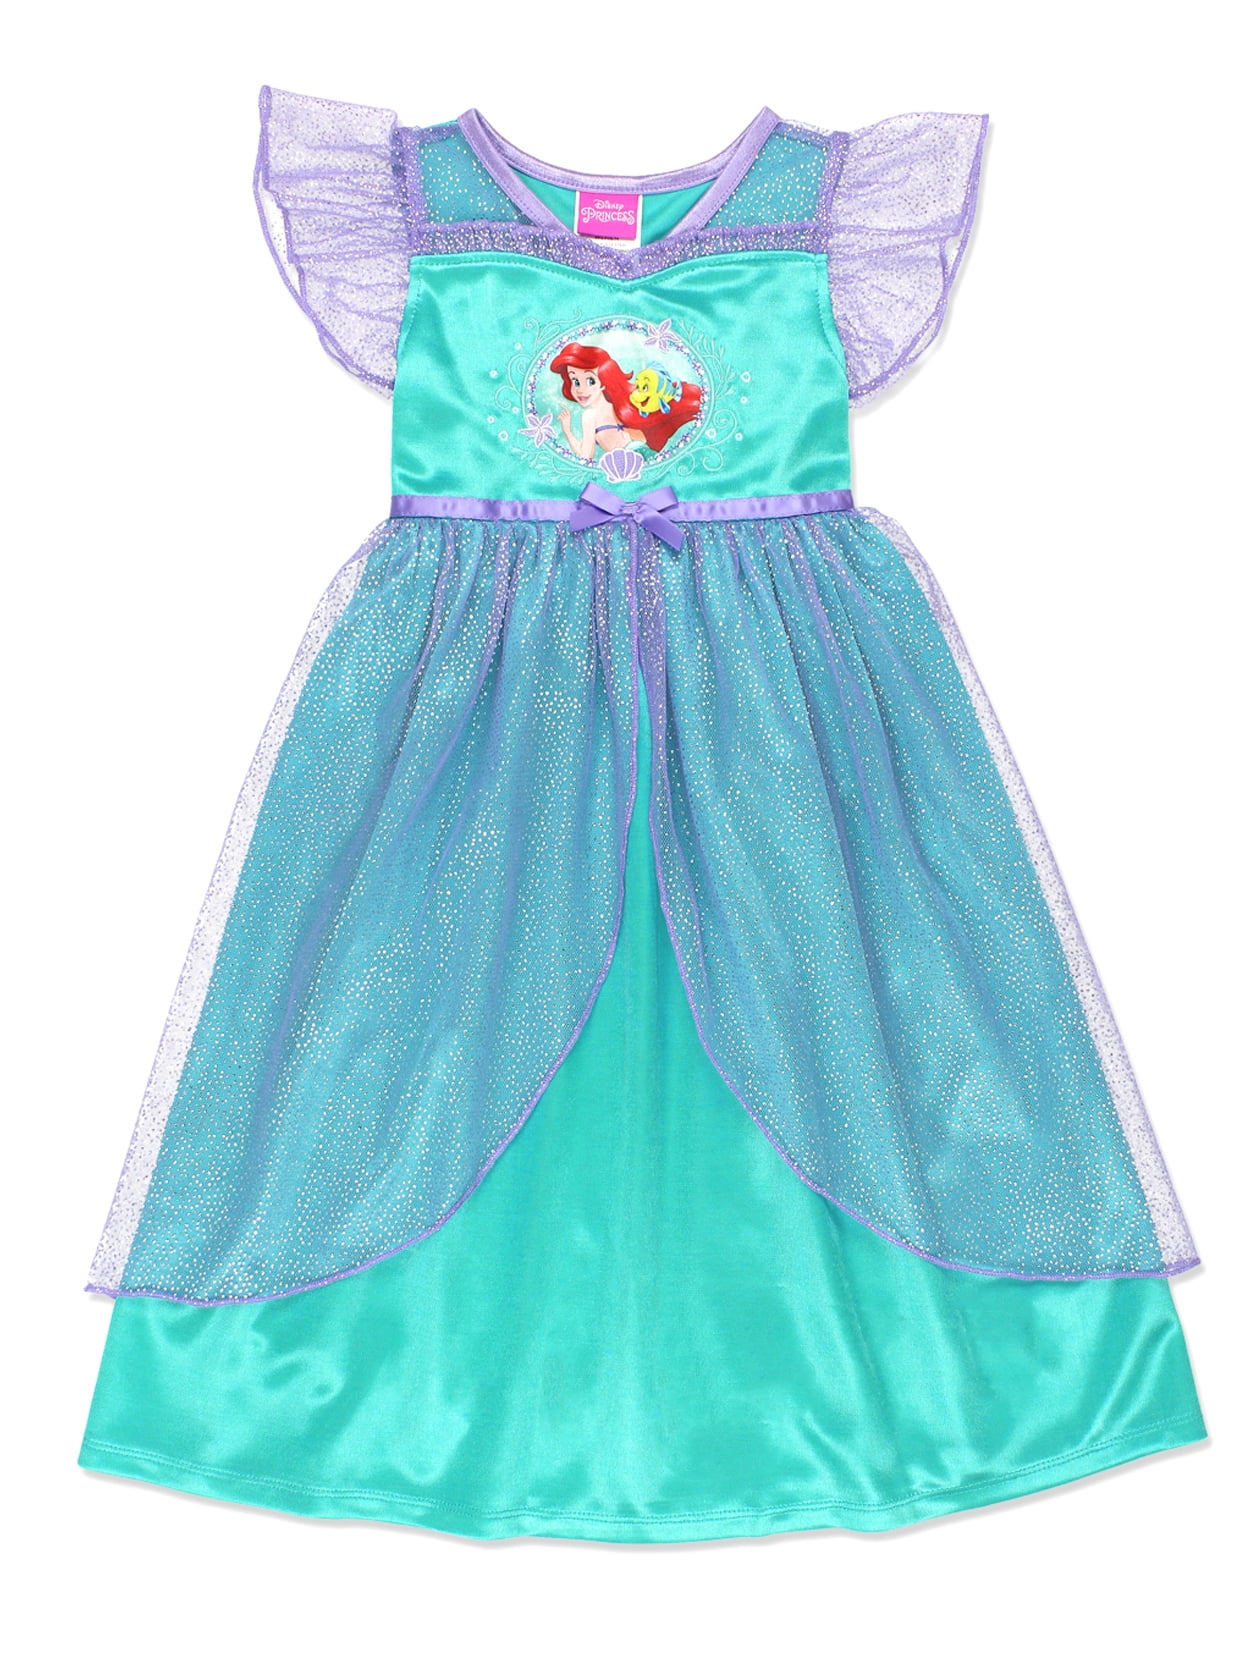 Disney Store Princess The Little Mermaid Ariel Nightgown Pajama Girl 4 5/6 